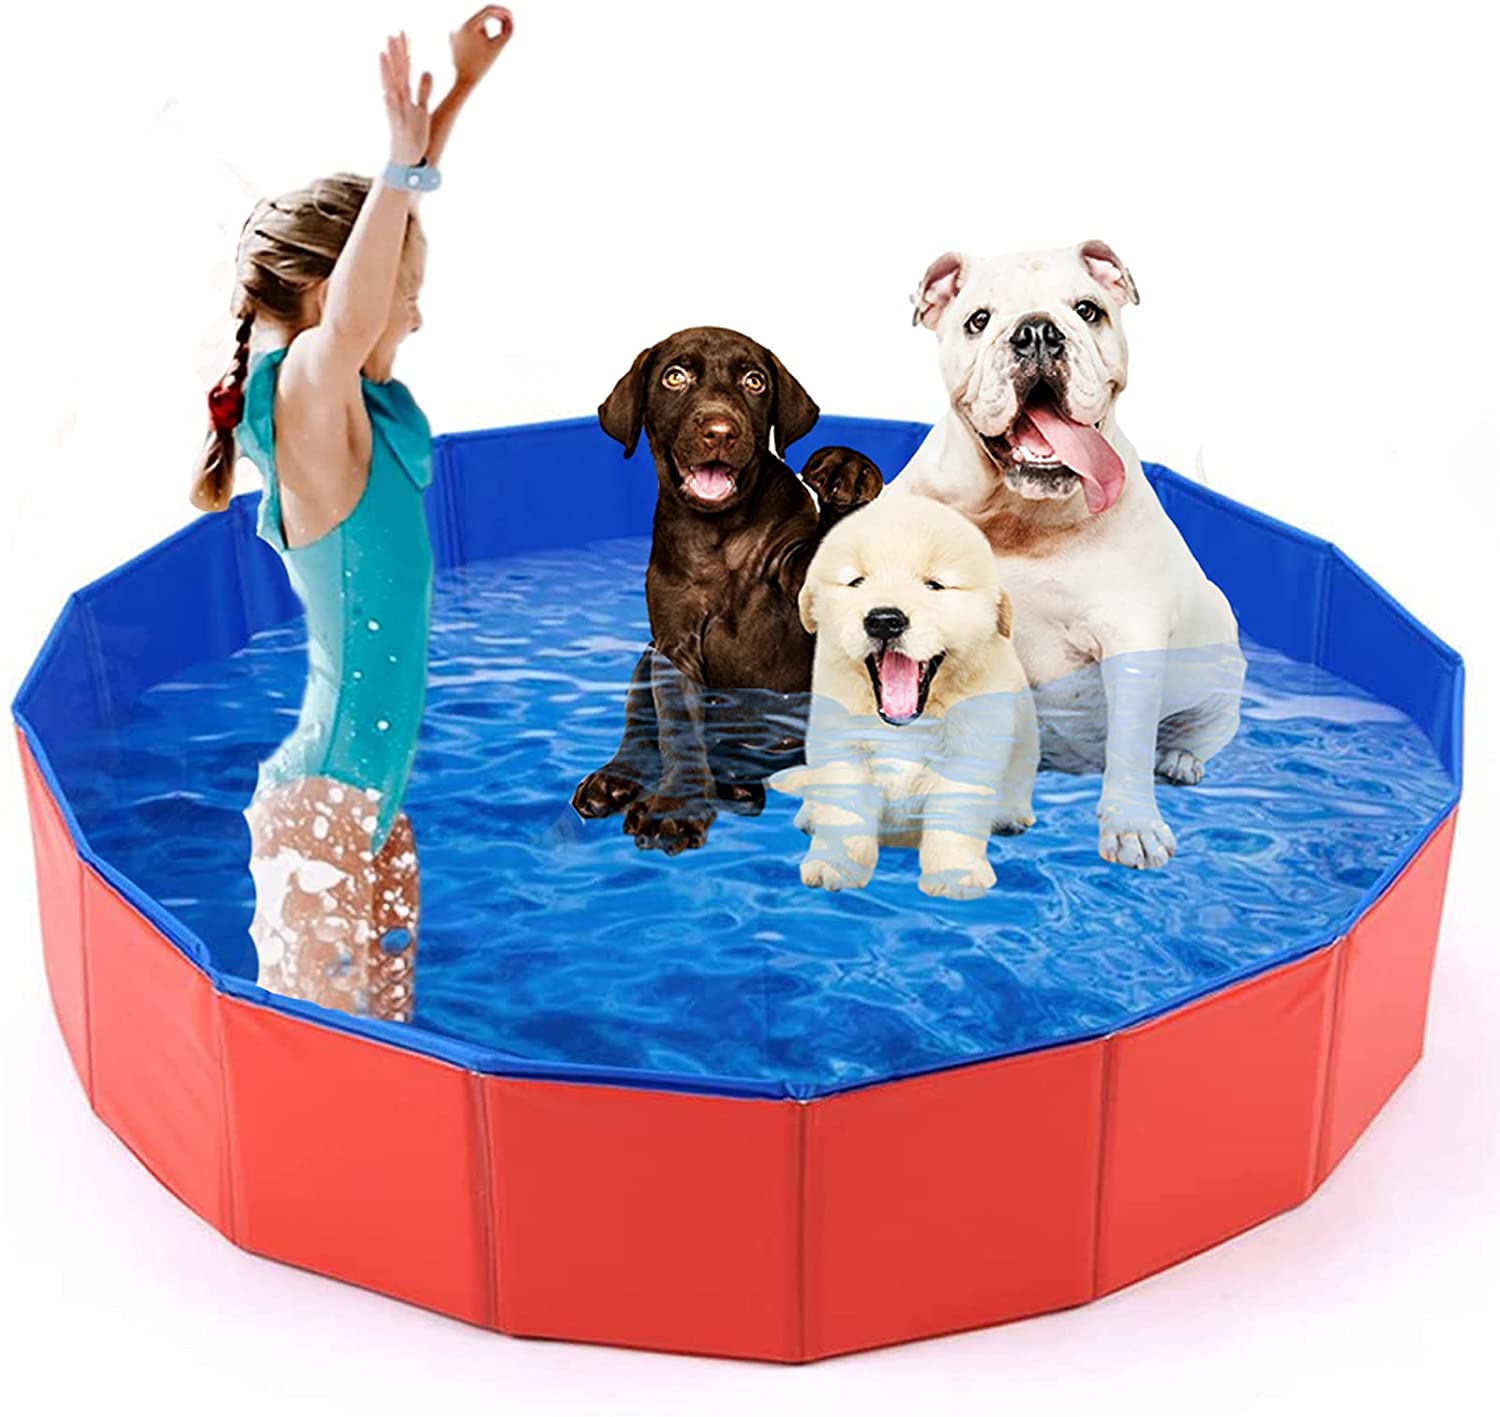 Mcgrady1xm-Collapsible-Pet-Dog-Bath-Pool-2